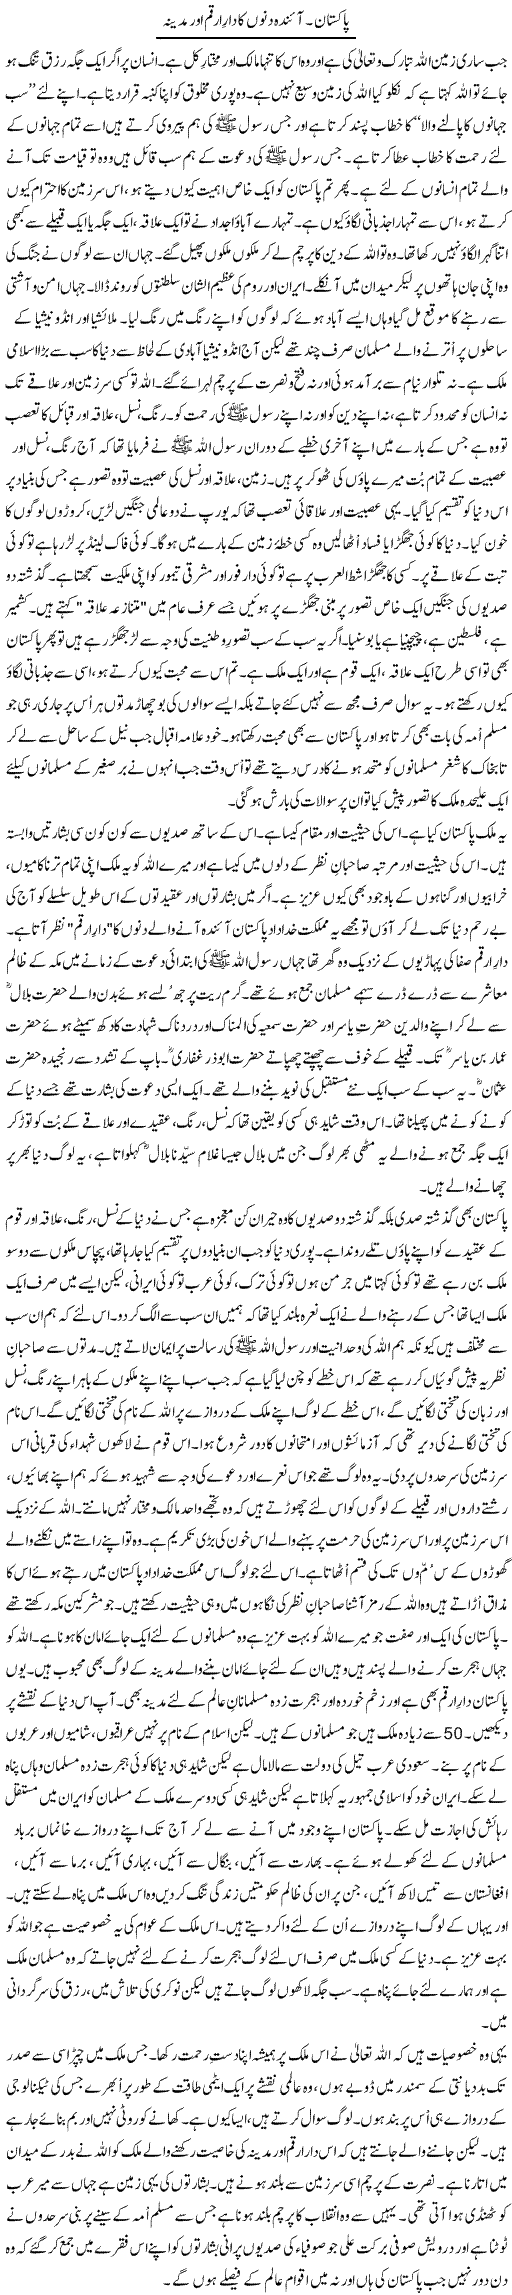 Future of Pakistan Express Column Orya Maqbool 9 July 2011